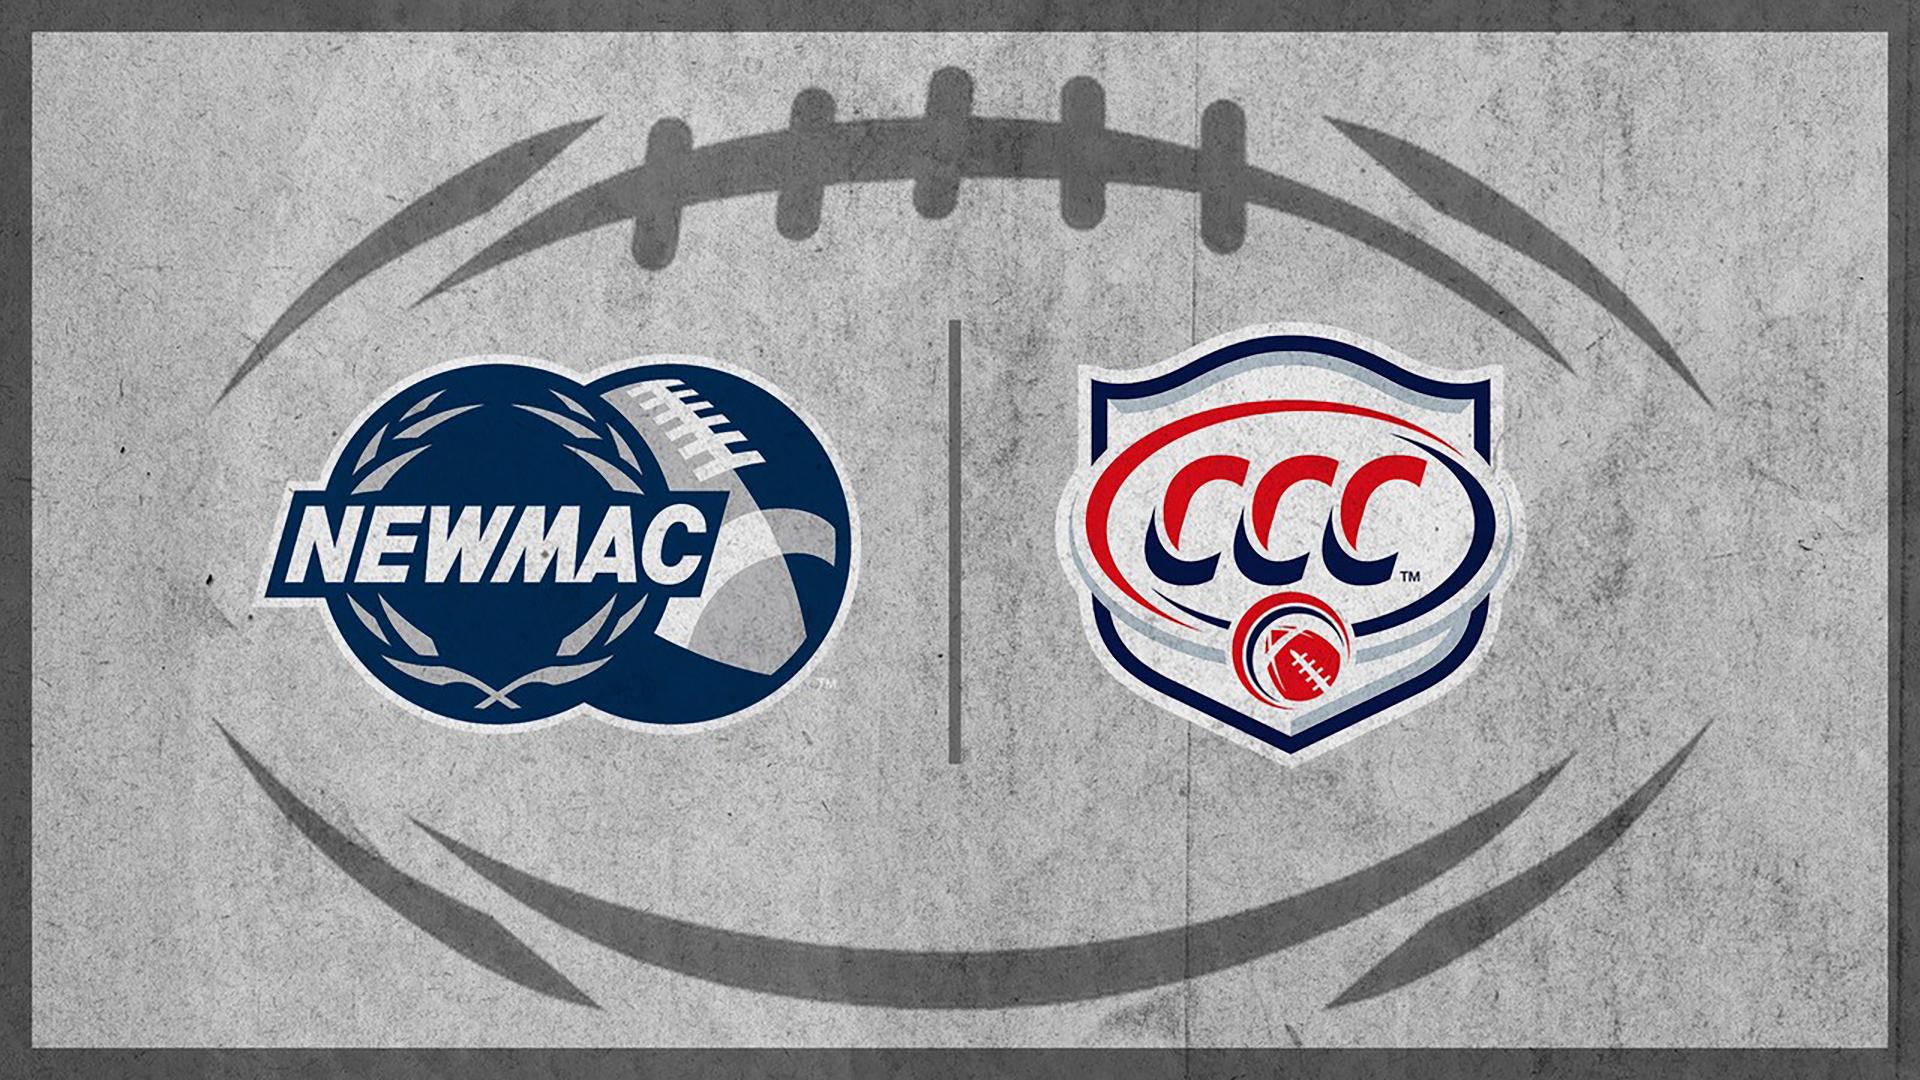 NEWMAC, CCC Partner for Football Alliance